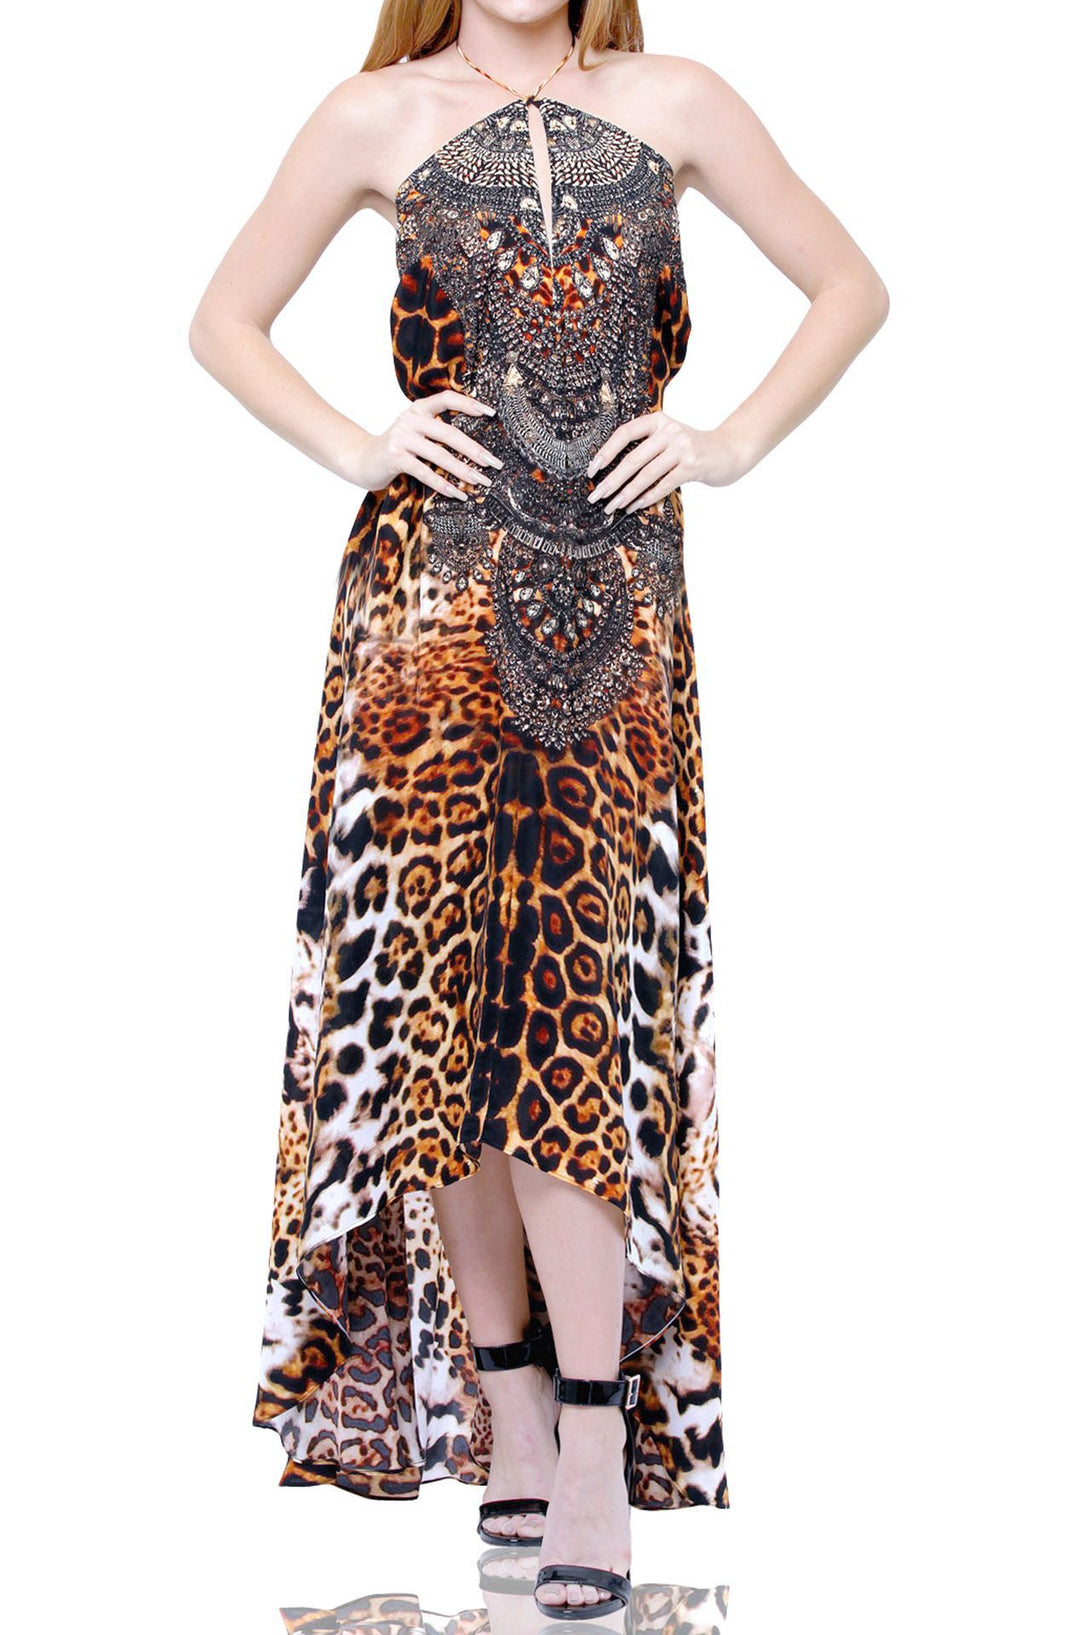 "animal print maxi dress" "cheetah print maxi dress" "Shahida Parides" "leopard long dress"